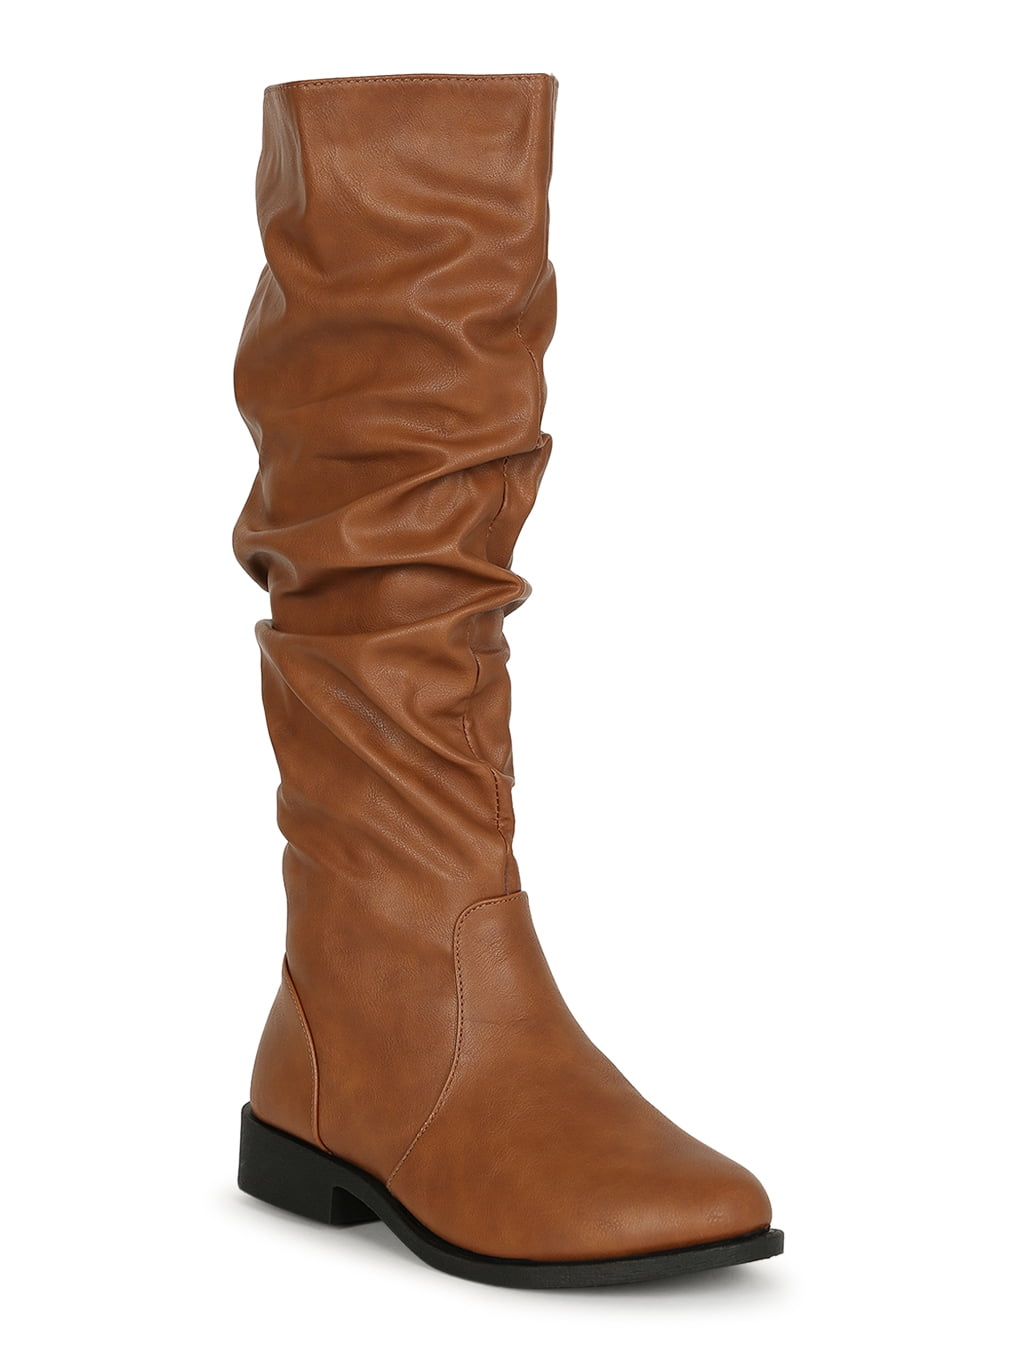 Women Round Toe Slouchy Knee High Boots 19582 - Walmart.com